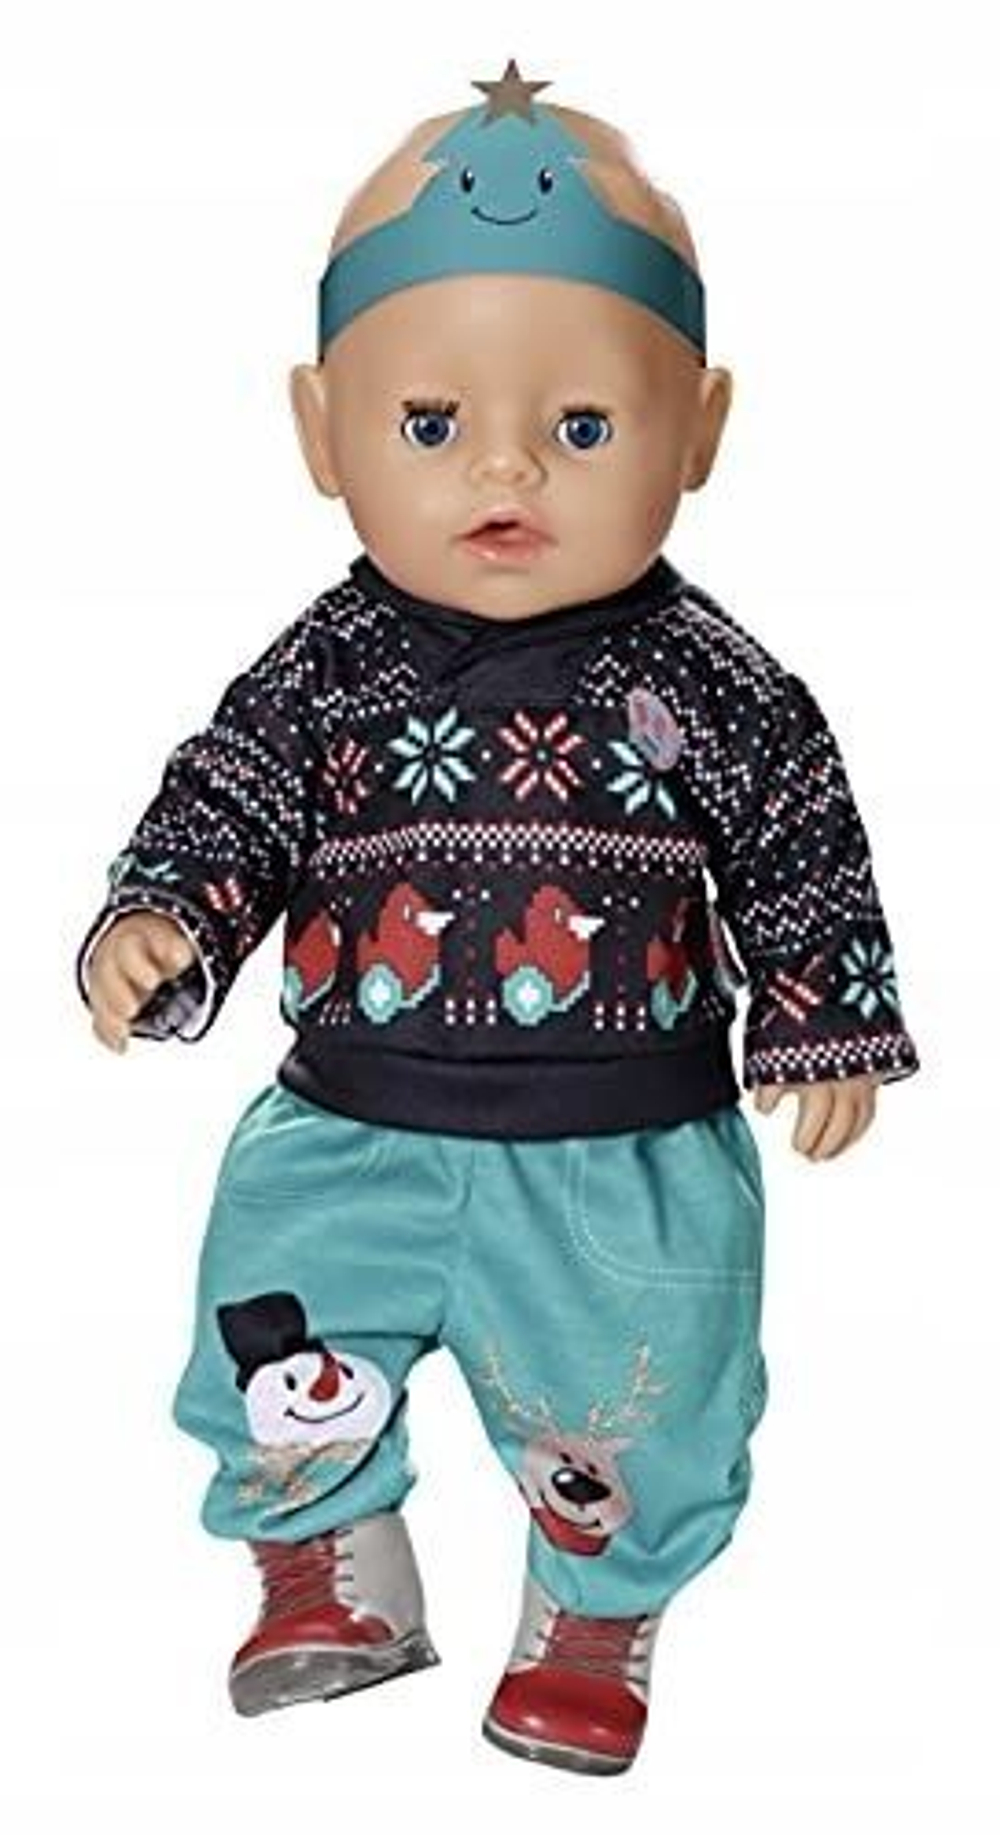 Игрушка Baby born Кукла-мальчик Интерактивная, 43 см, кор. ZAPF CREATION 818-343